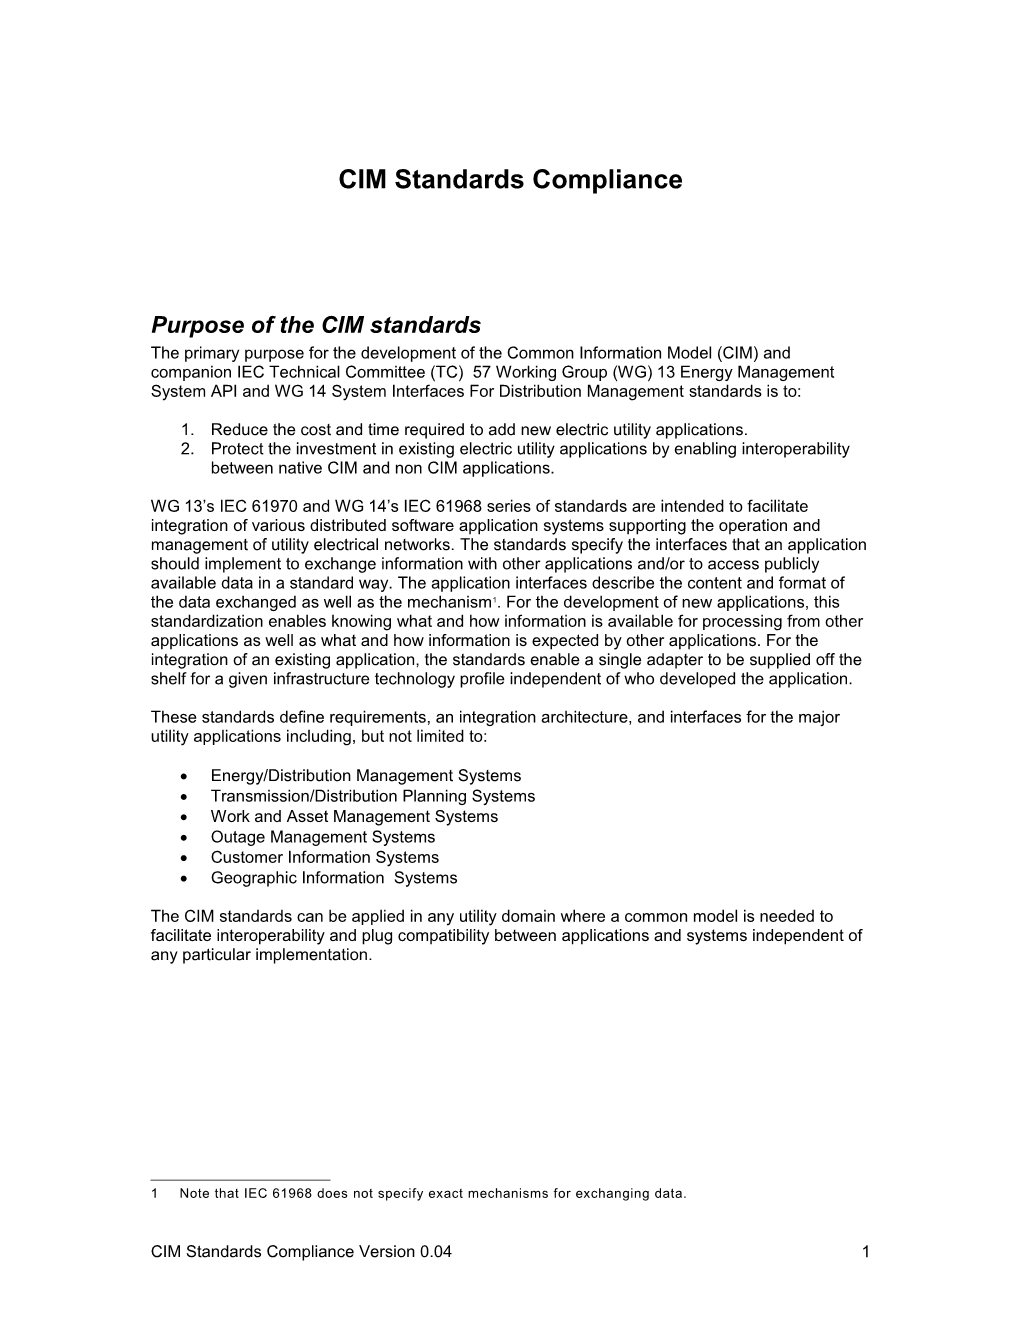 CIM Compliance Statement